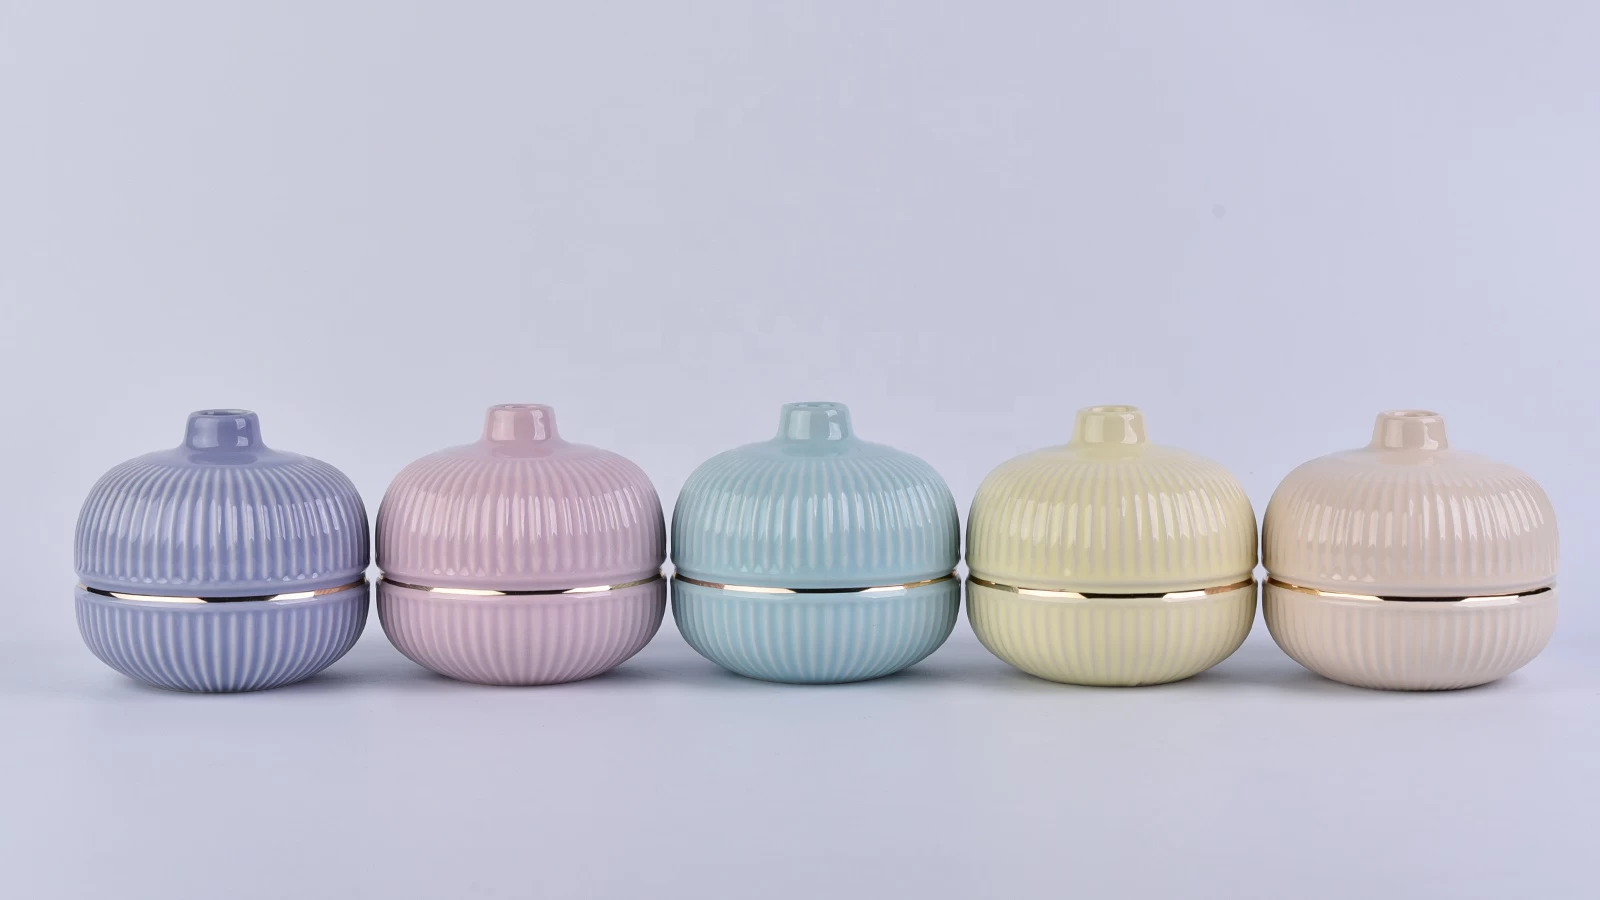 Ball shape blue ceramic oil aroma diffuser reed bottles